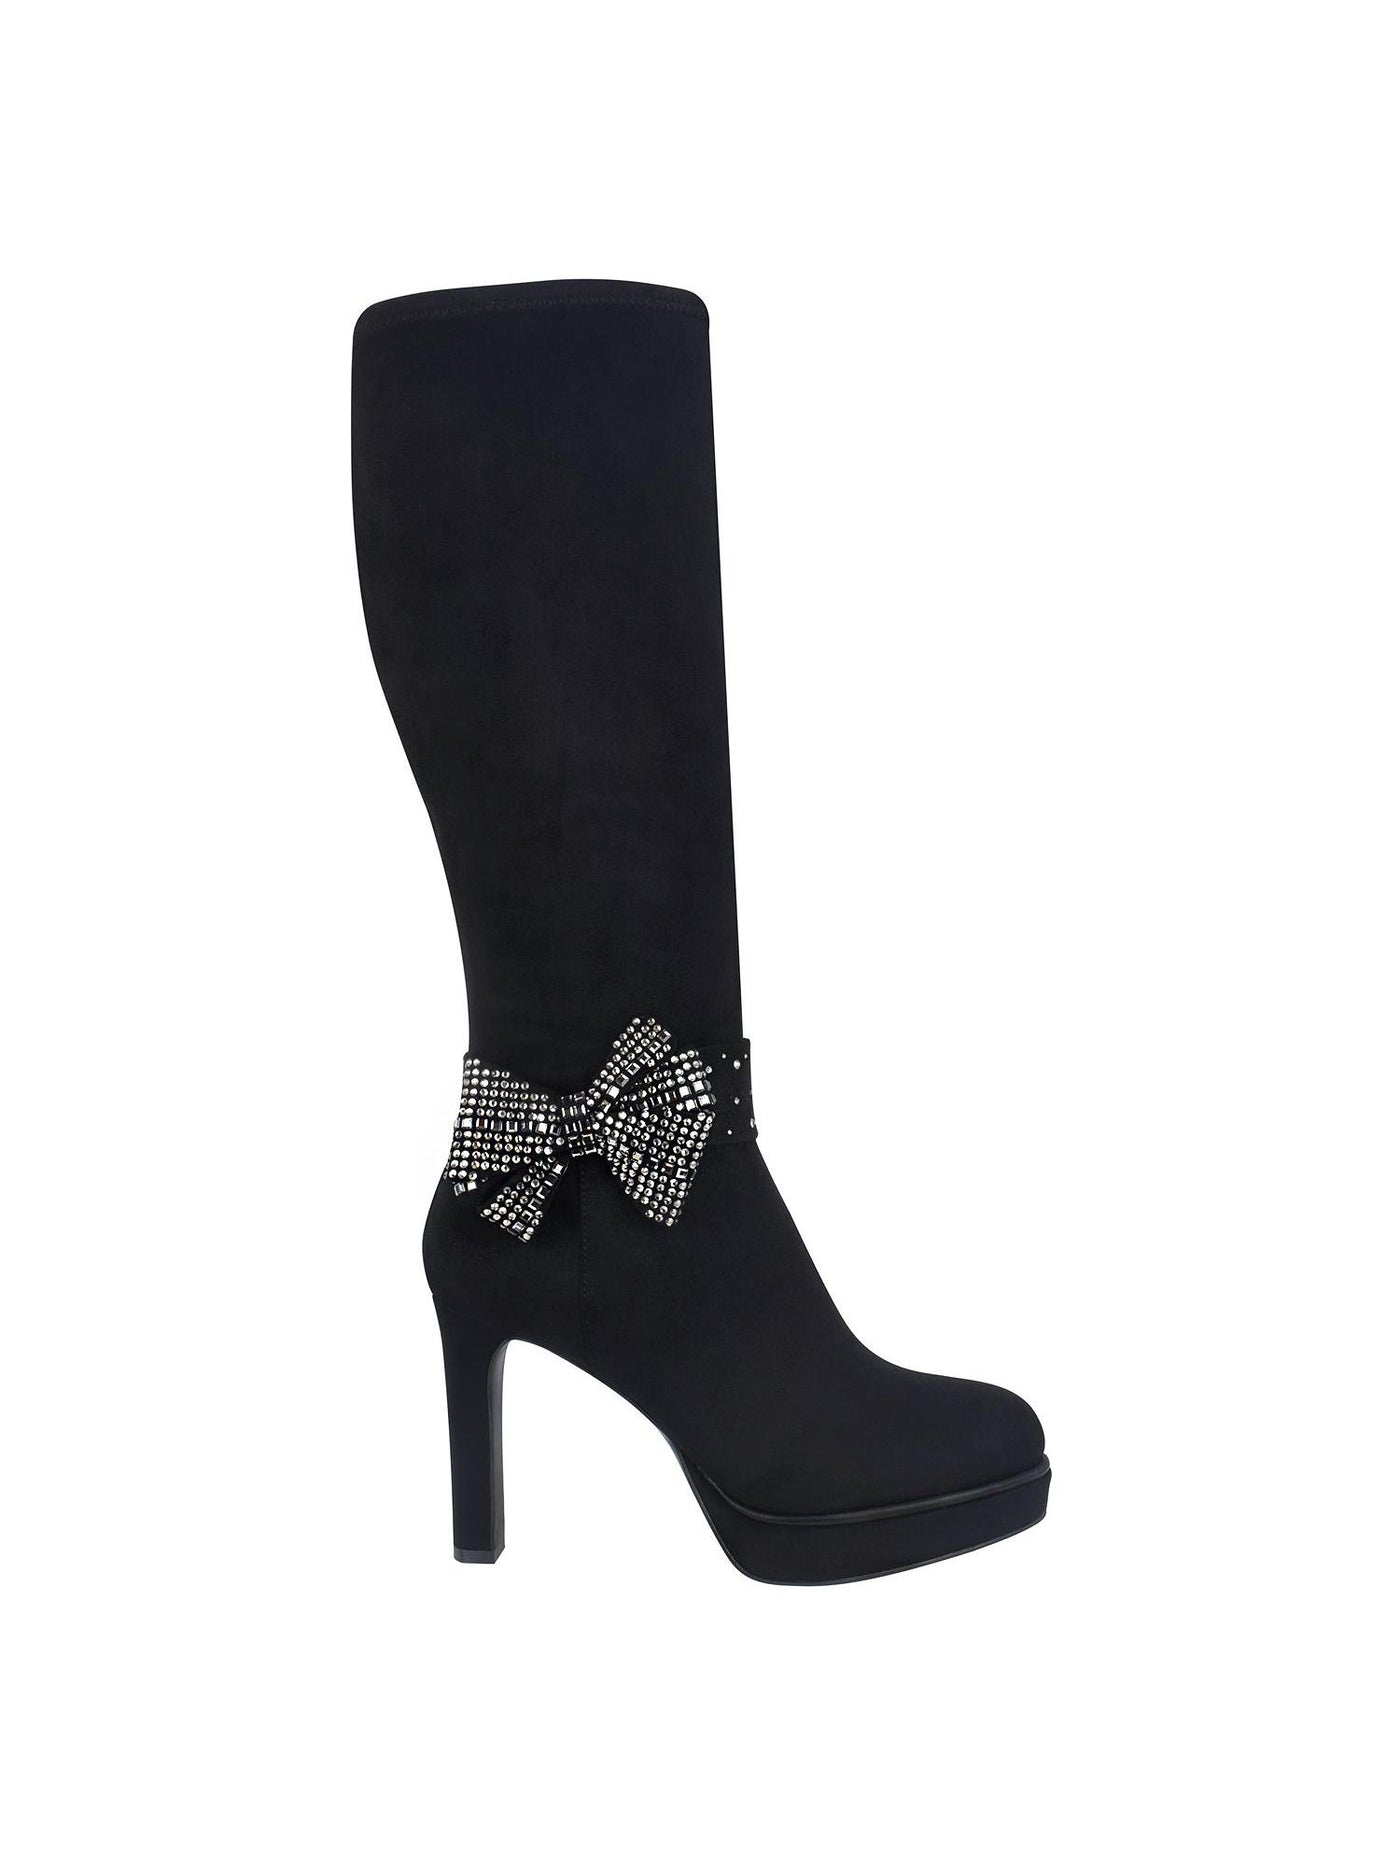 IMPO Womens Black Bow Accent Rhinestone Onneli Almond Toe Block Heel Zip-Up Heeled Boots 9 M